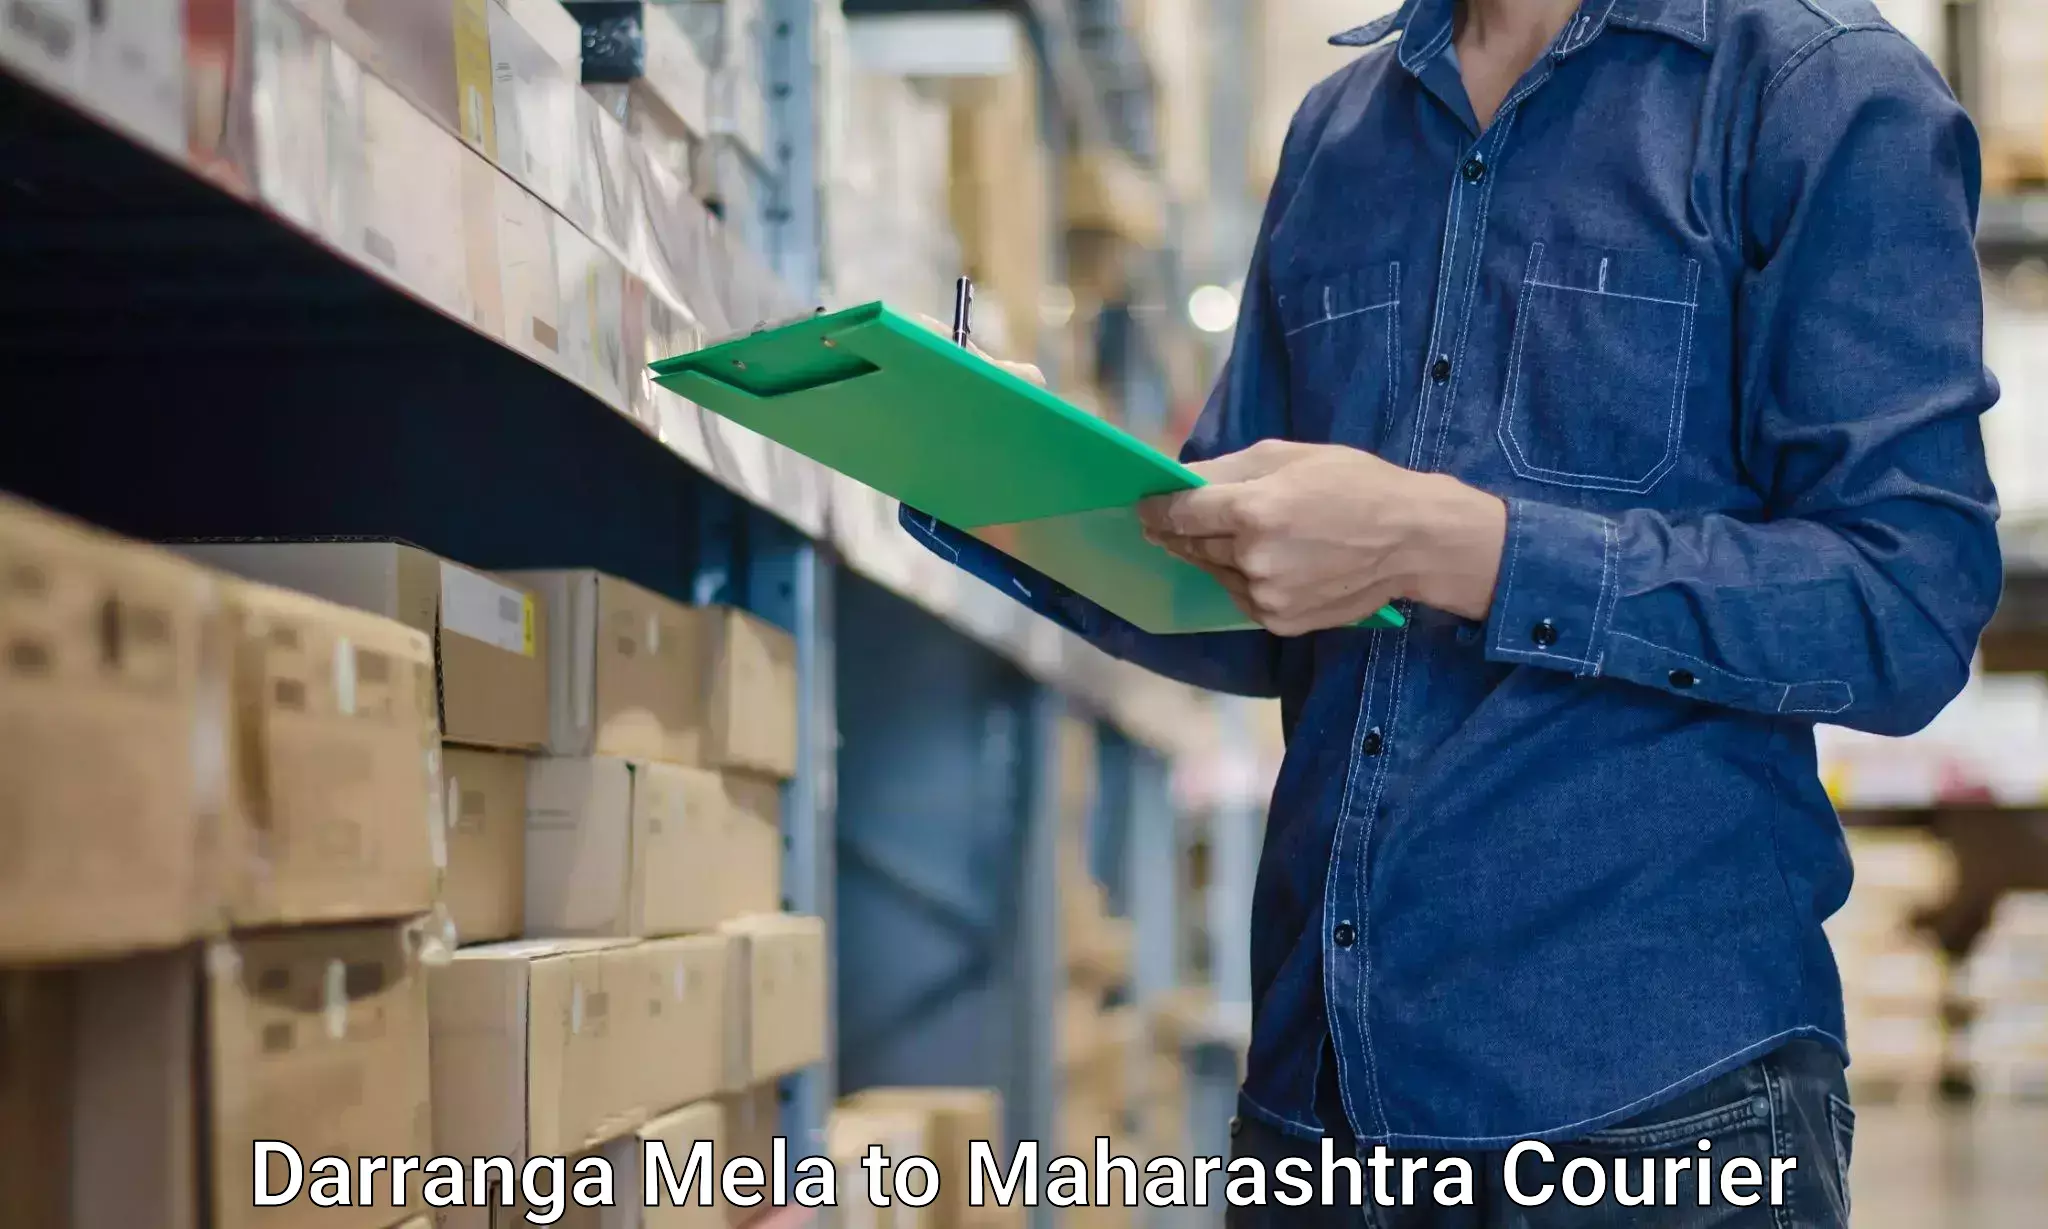 Advanced moving services Darranga Mela to Maharashtra